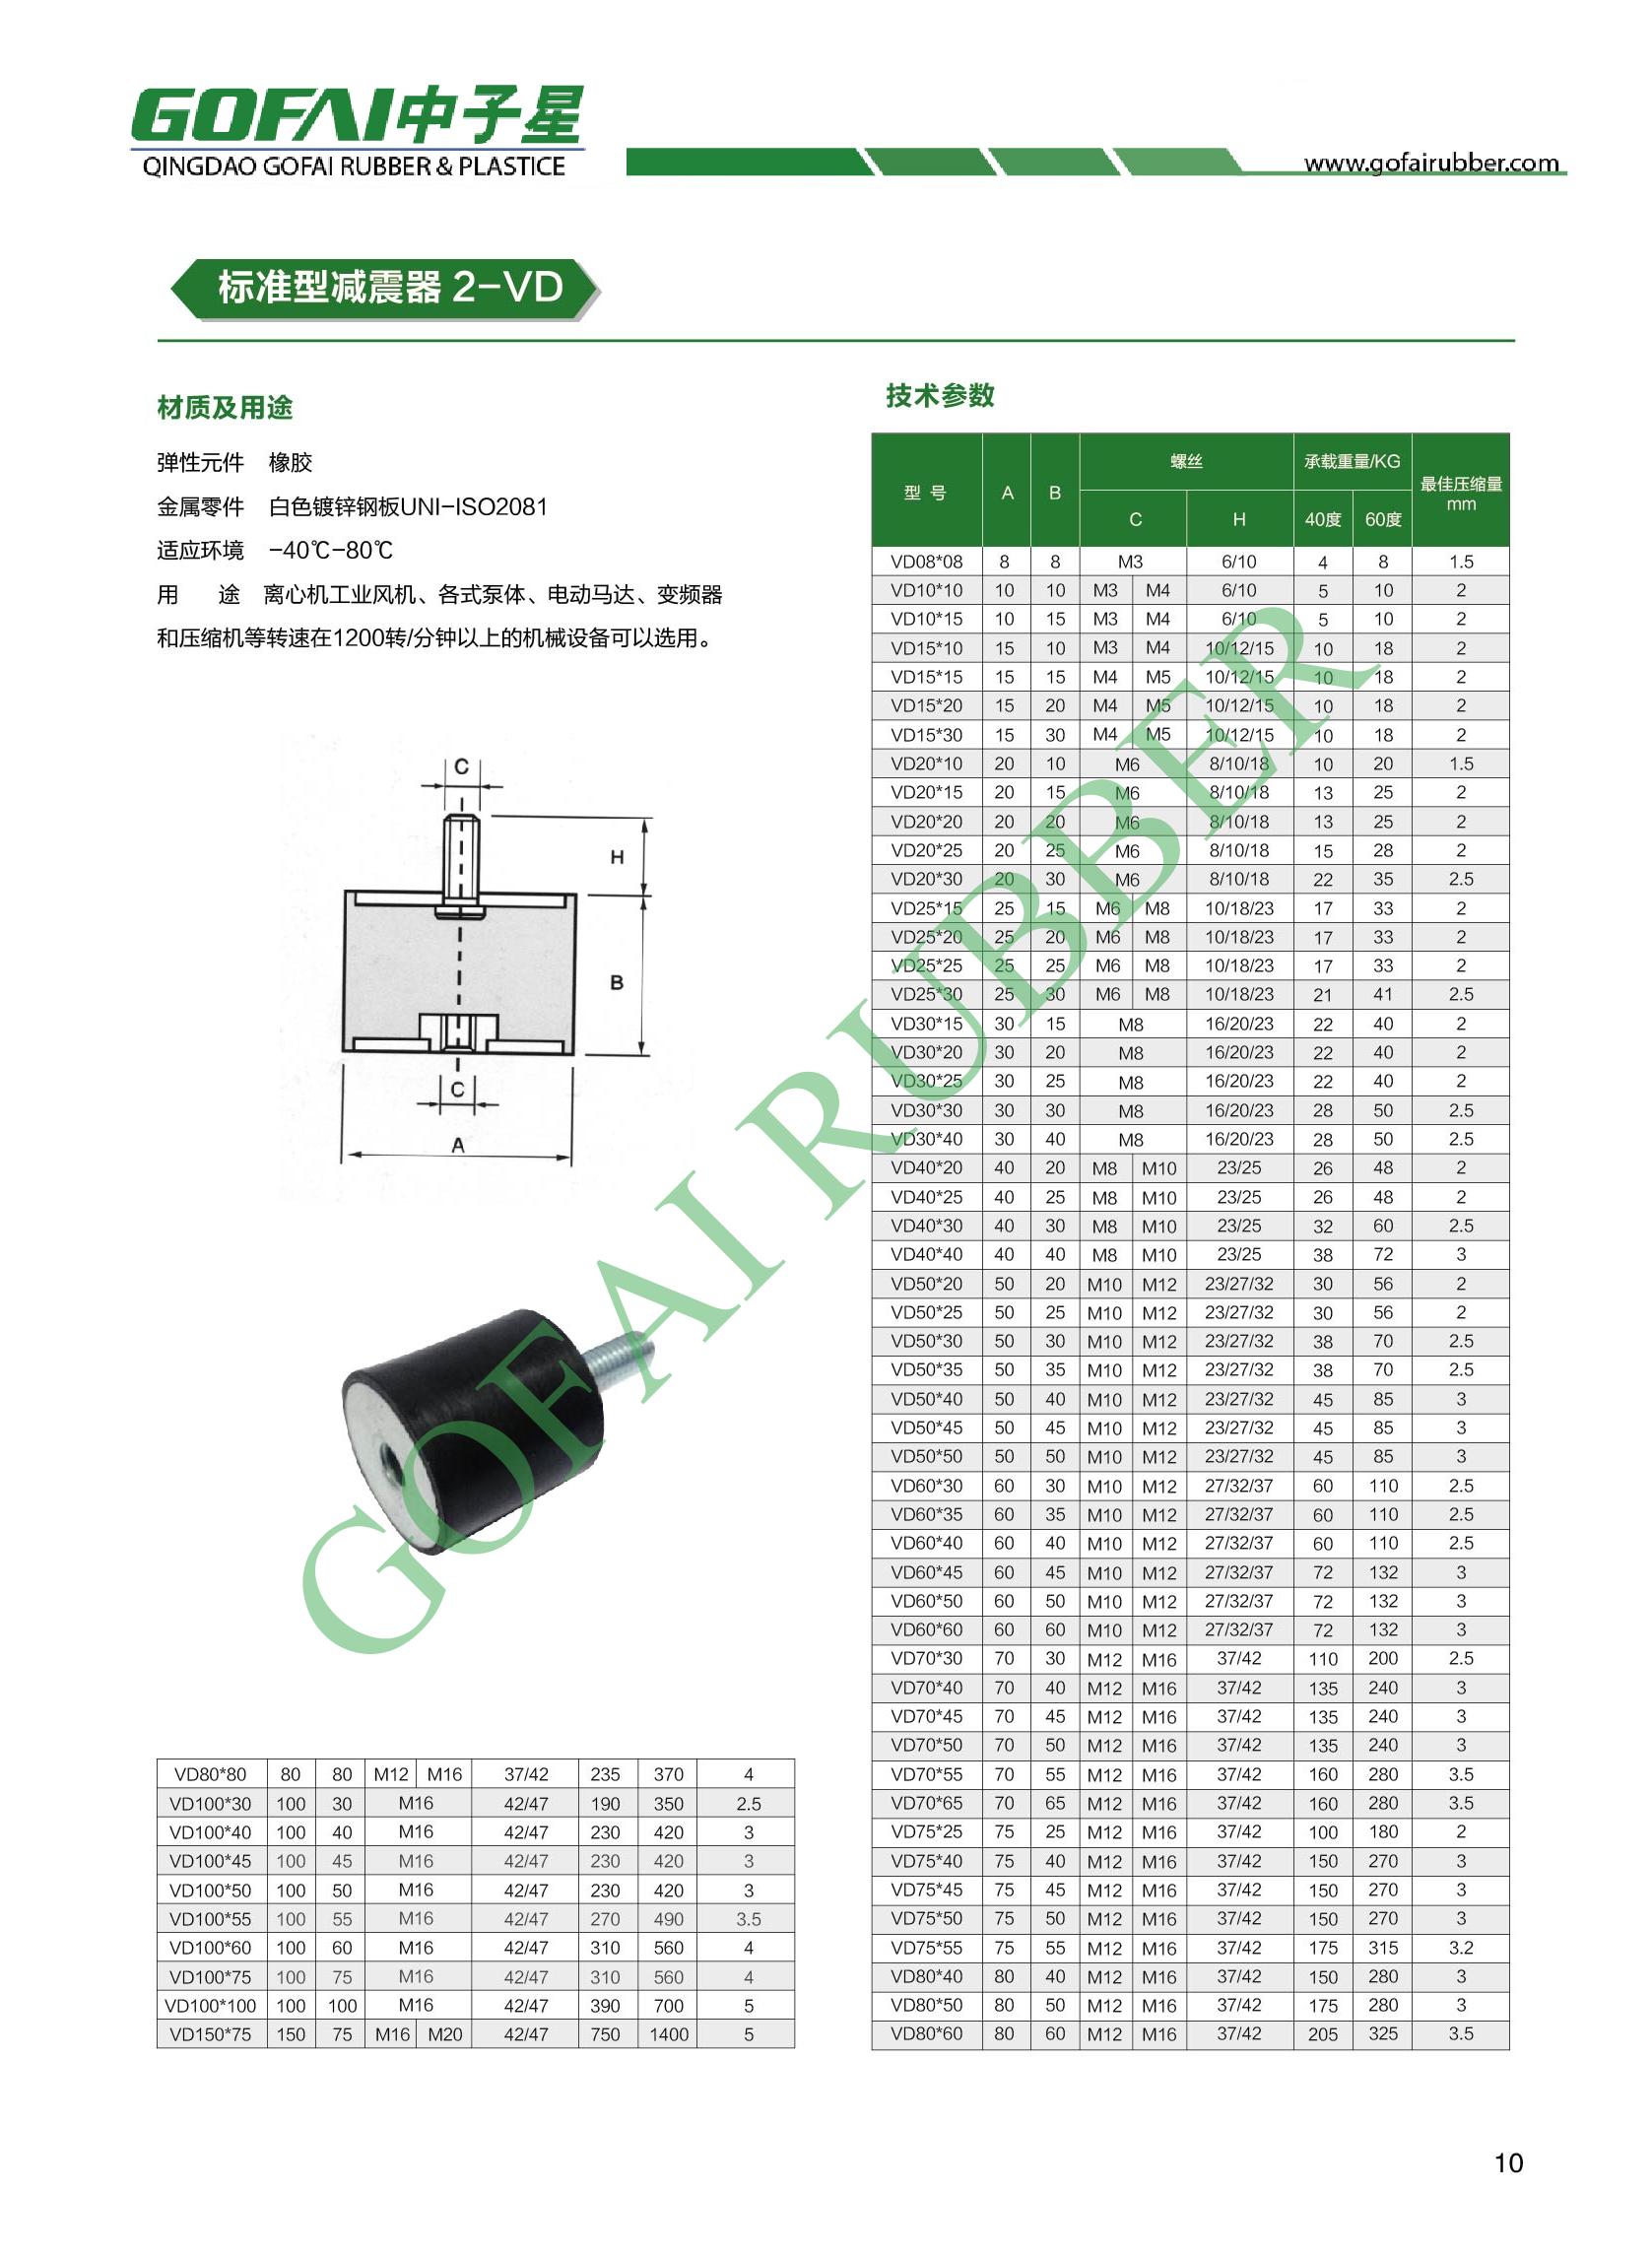 GOFAI catalog for rubber anti-vibration mounts_8.jpg